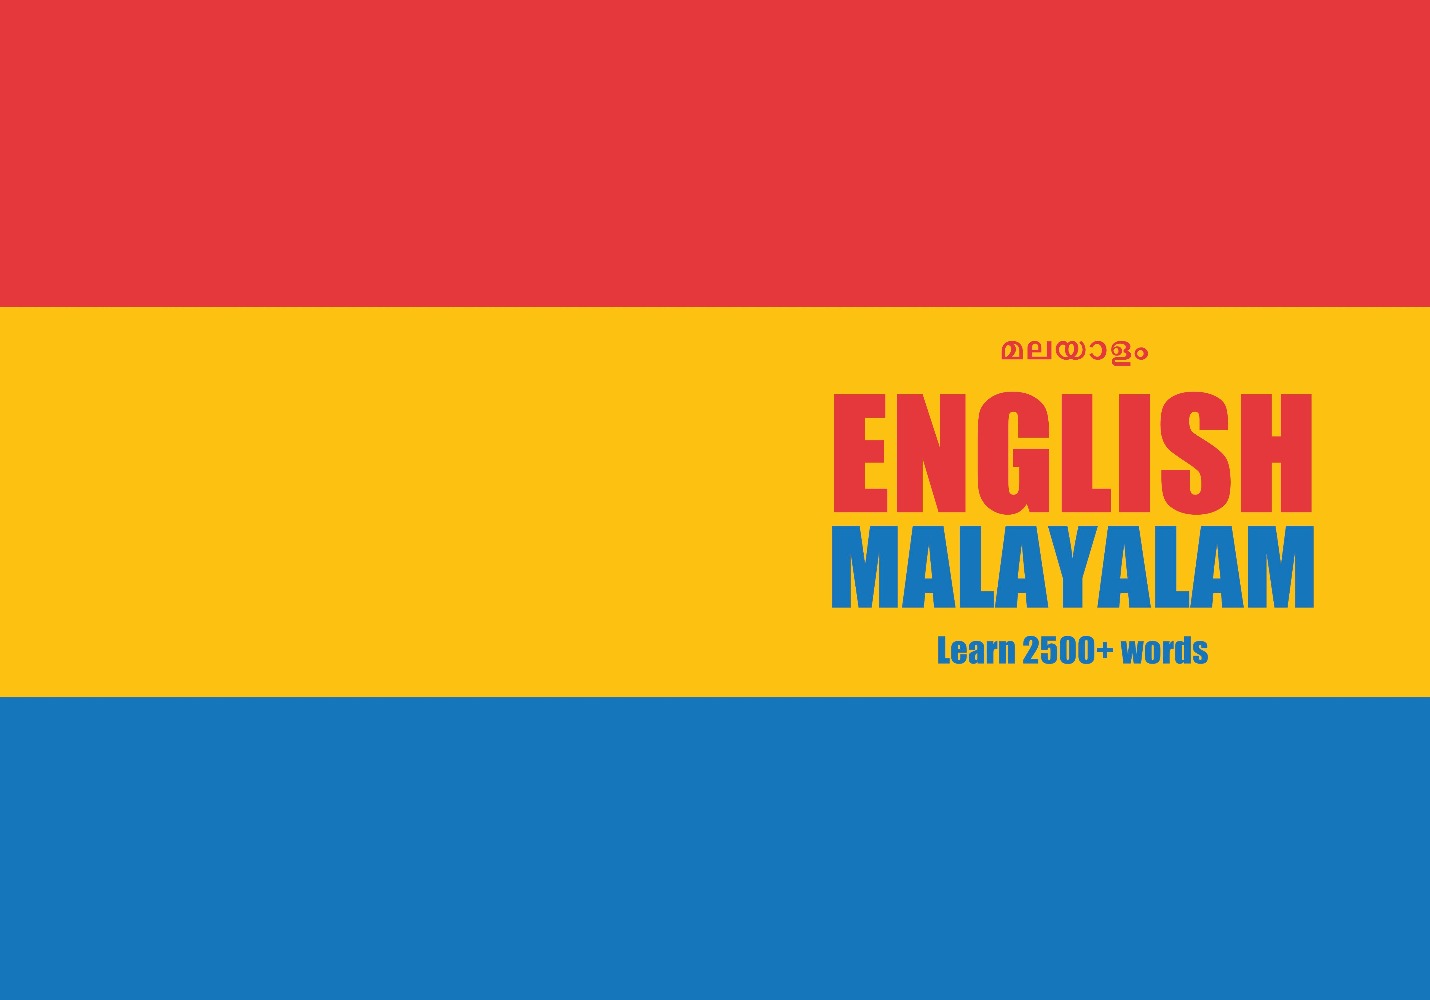 Malayalam language learning notebook cover